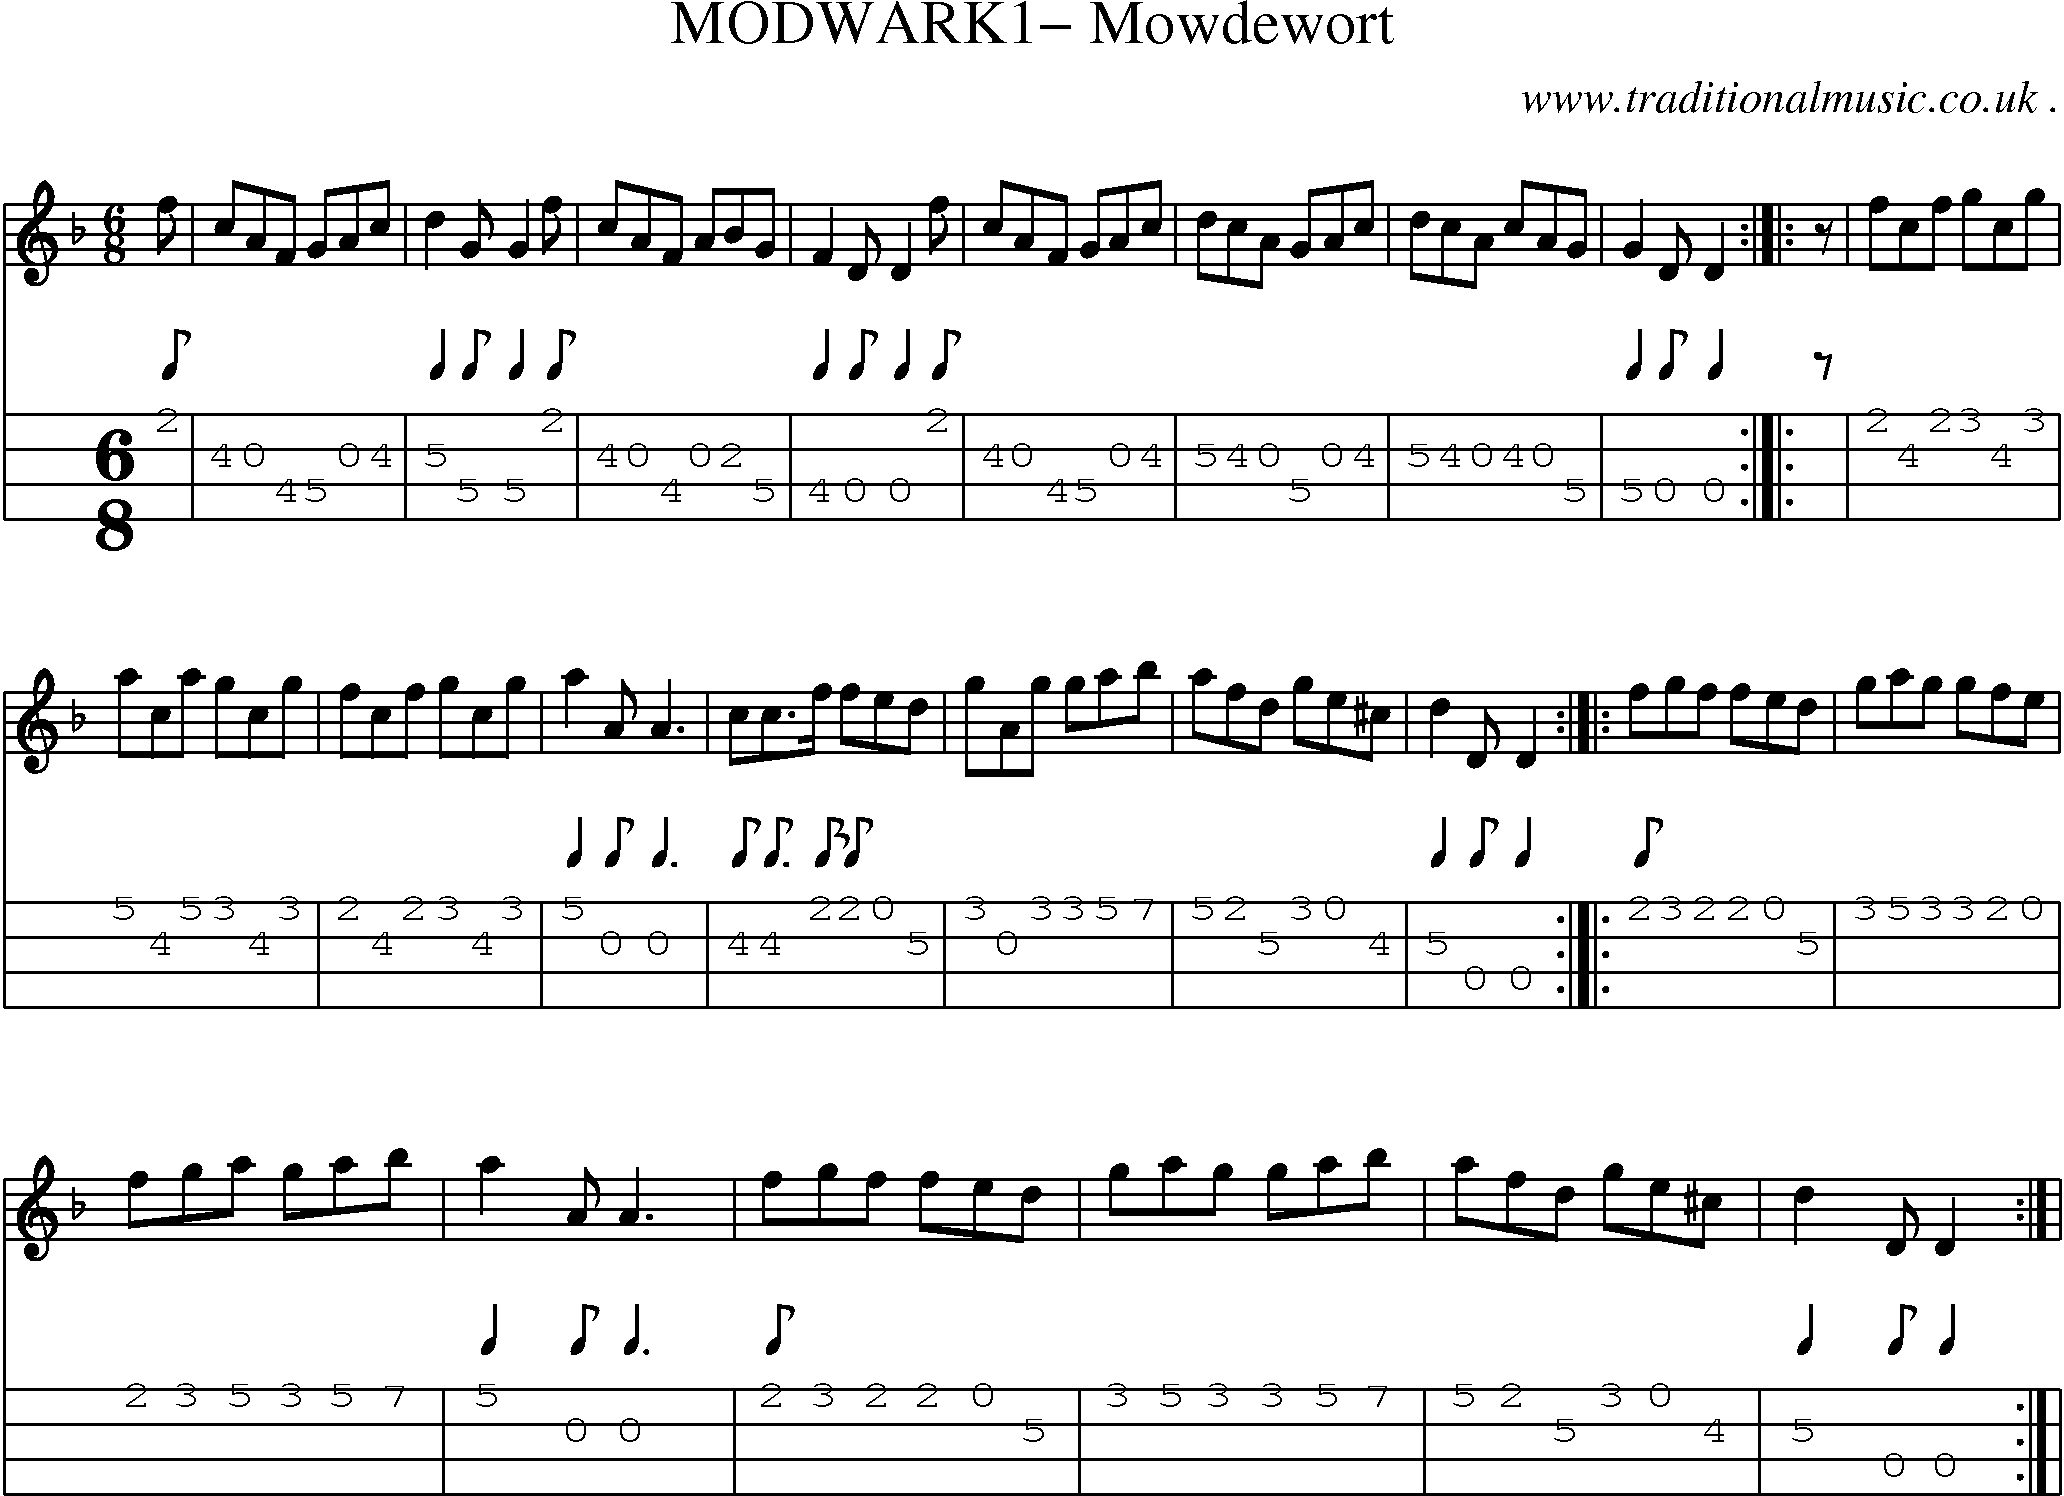 Sheet-Music and Mandolin Tabs for Modwark1 Mowdewort